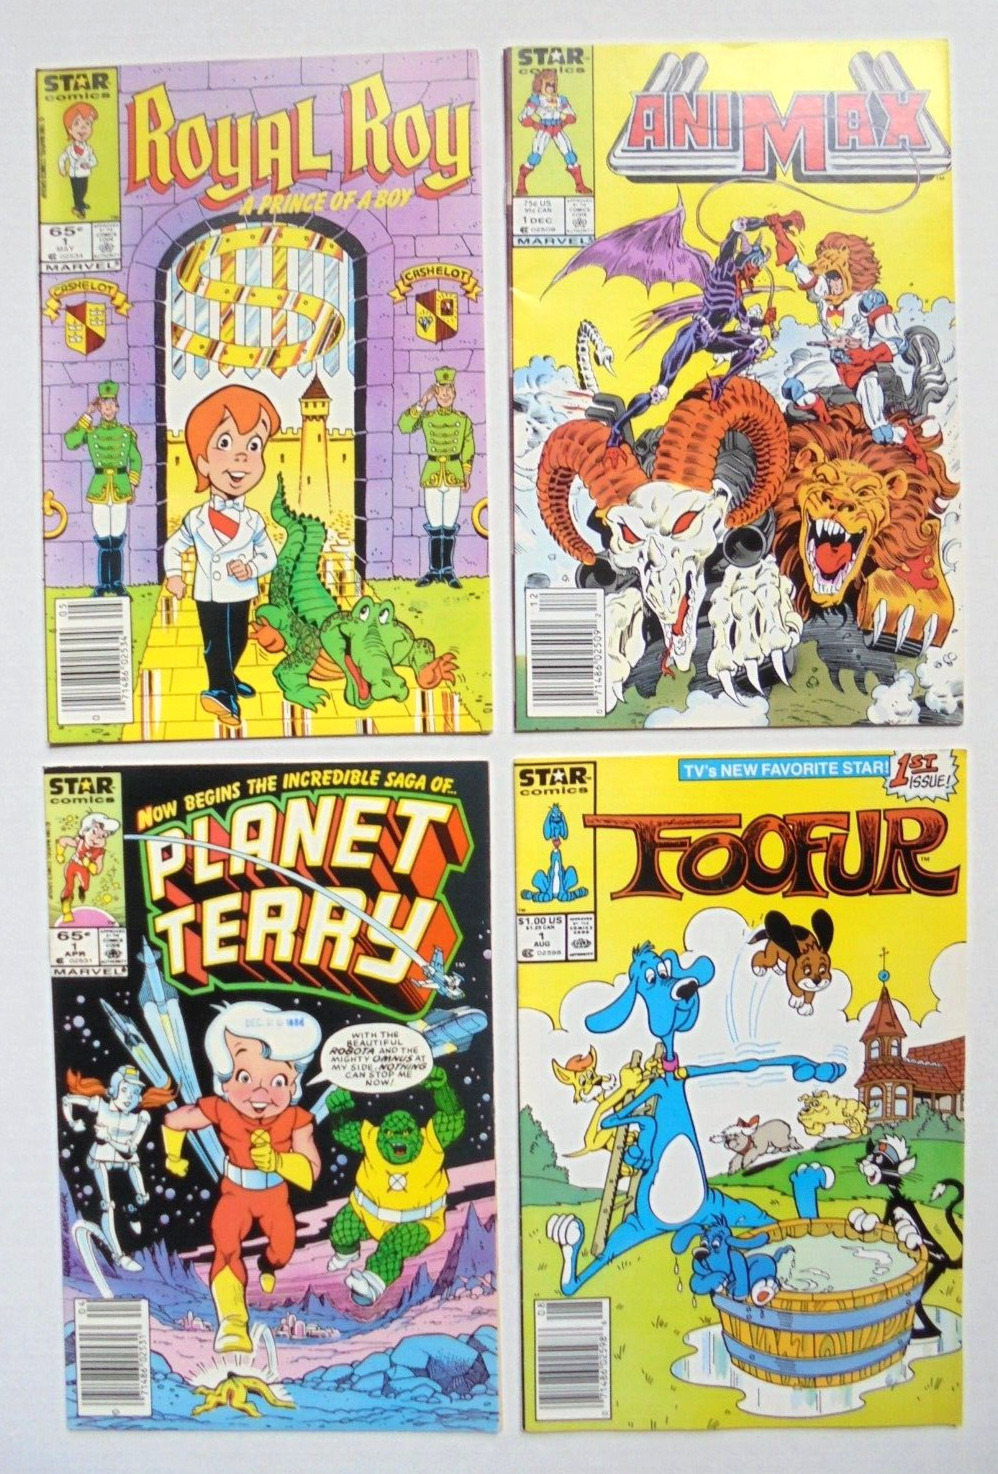 Foofur 1, Animax 1, Planet Terry 1, Royal Roy 1 1st Print Marvel/Star Comics